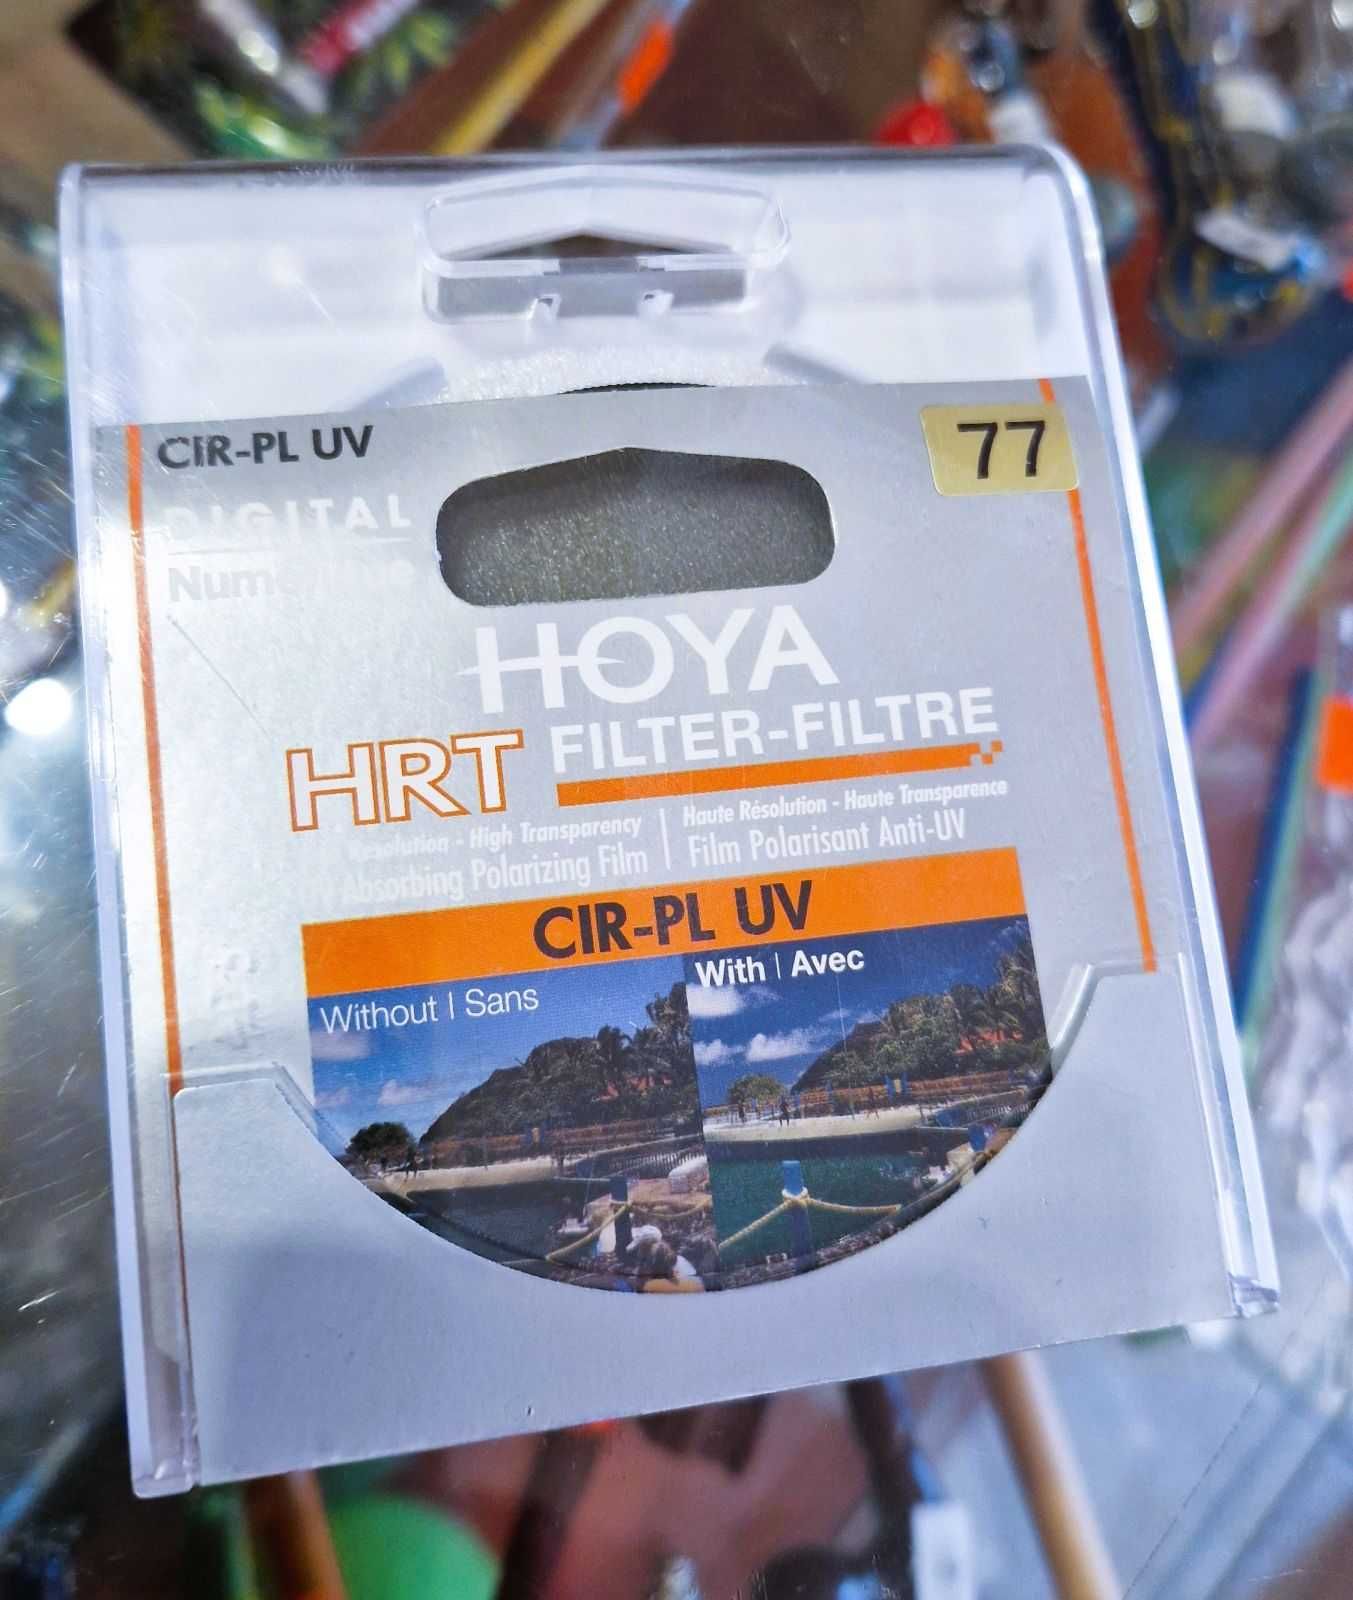 Filtr na obiektyw HOYA HRT CIR-PL UV 77MM